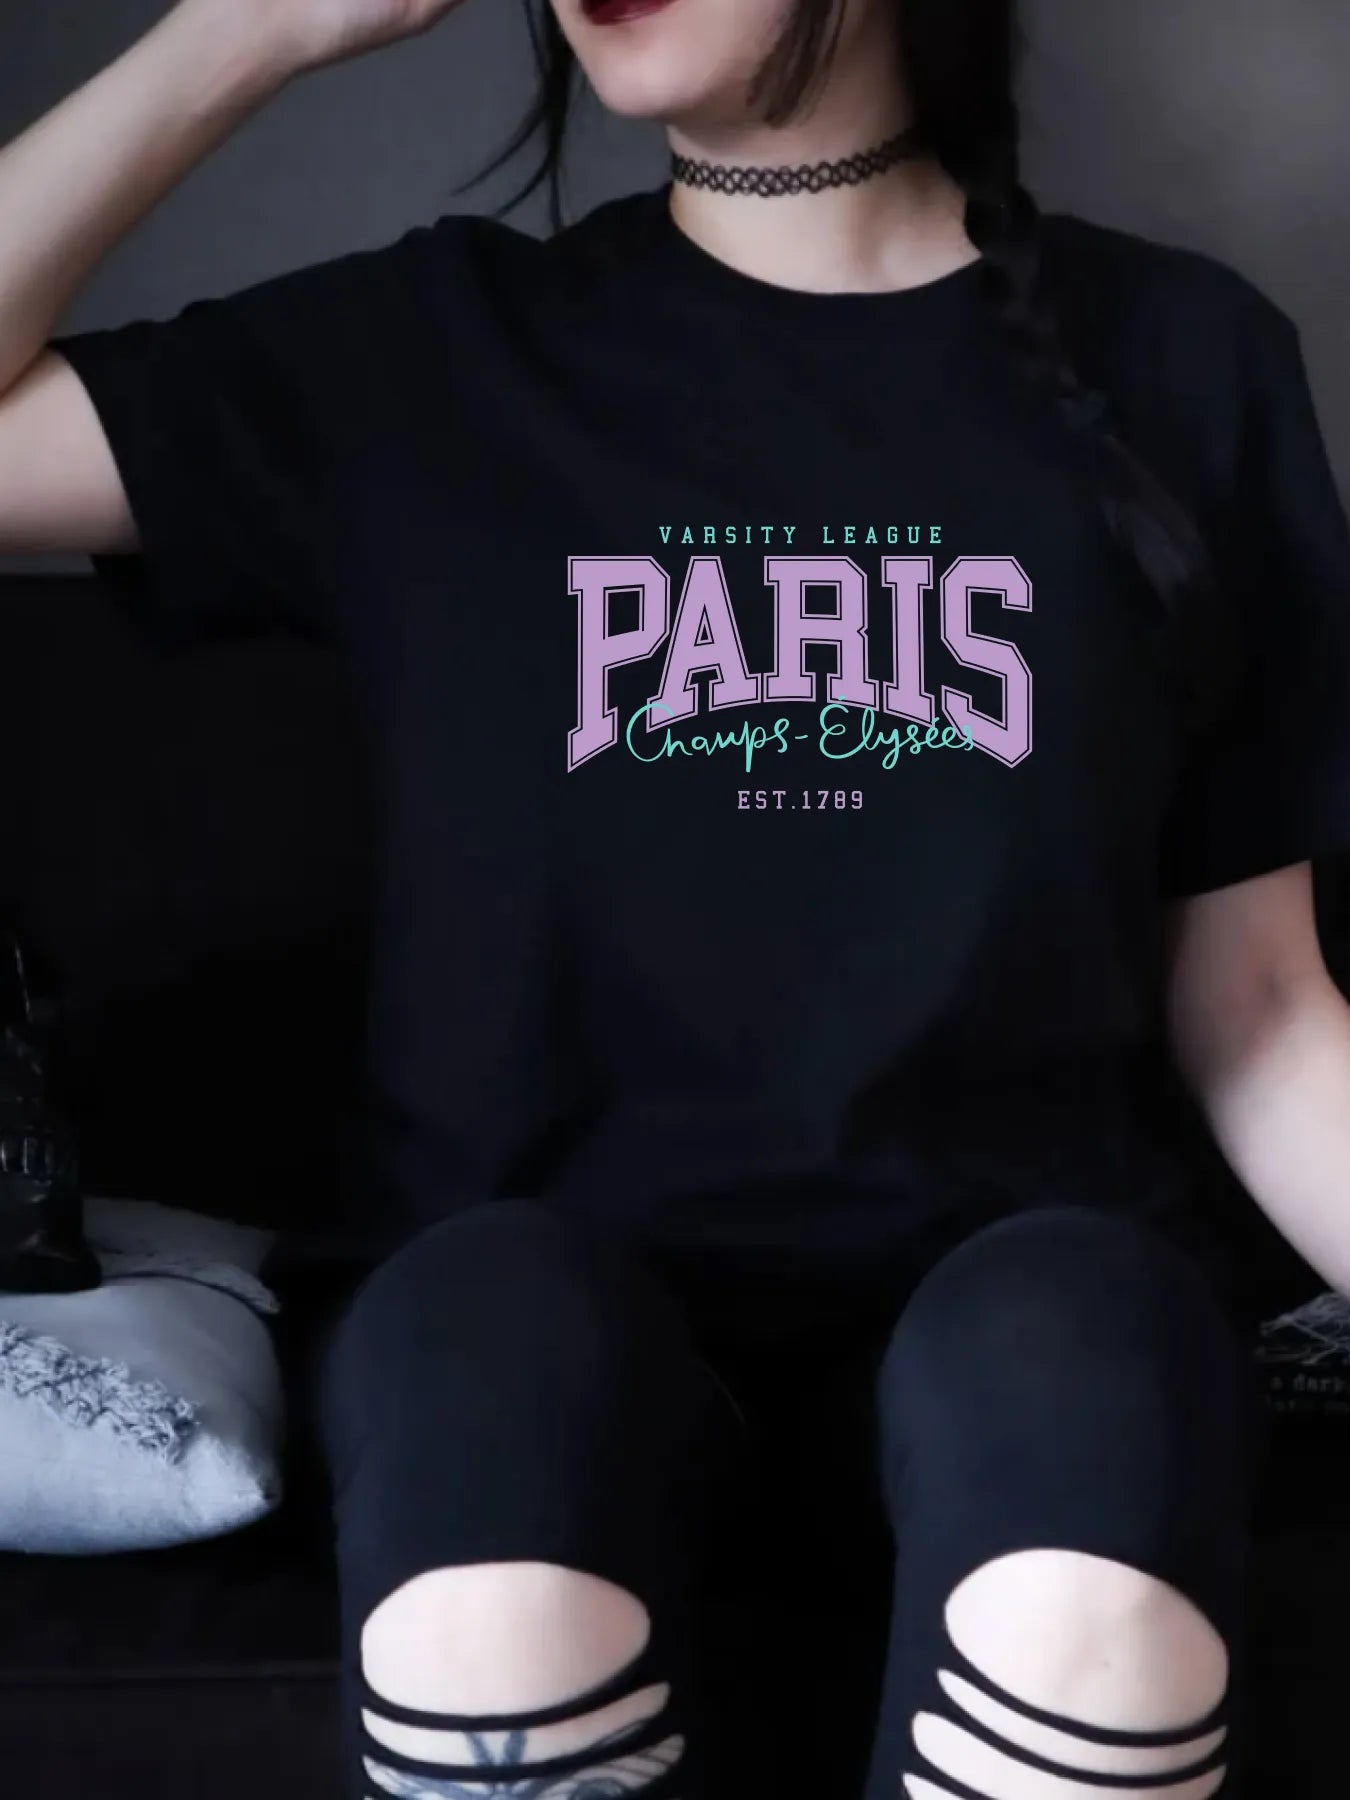 PARIS - T-Shirt